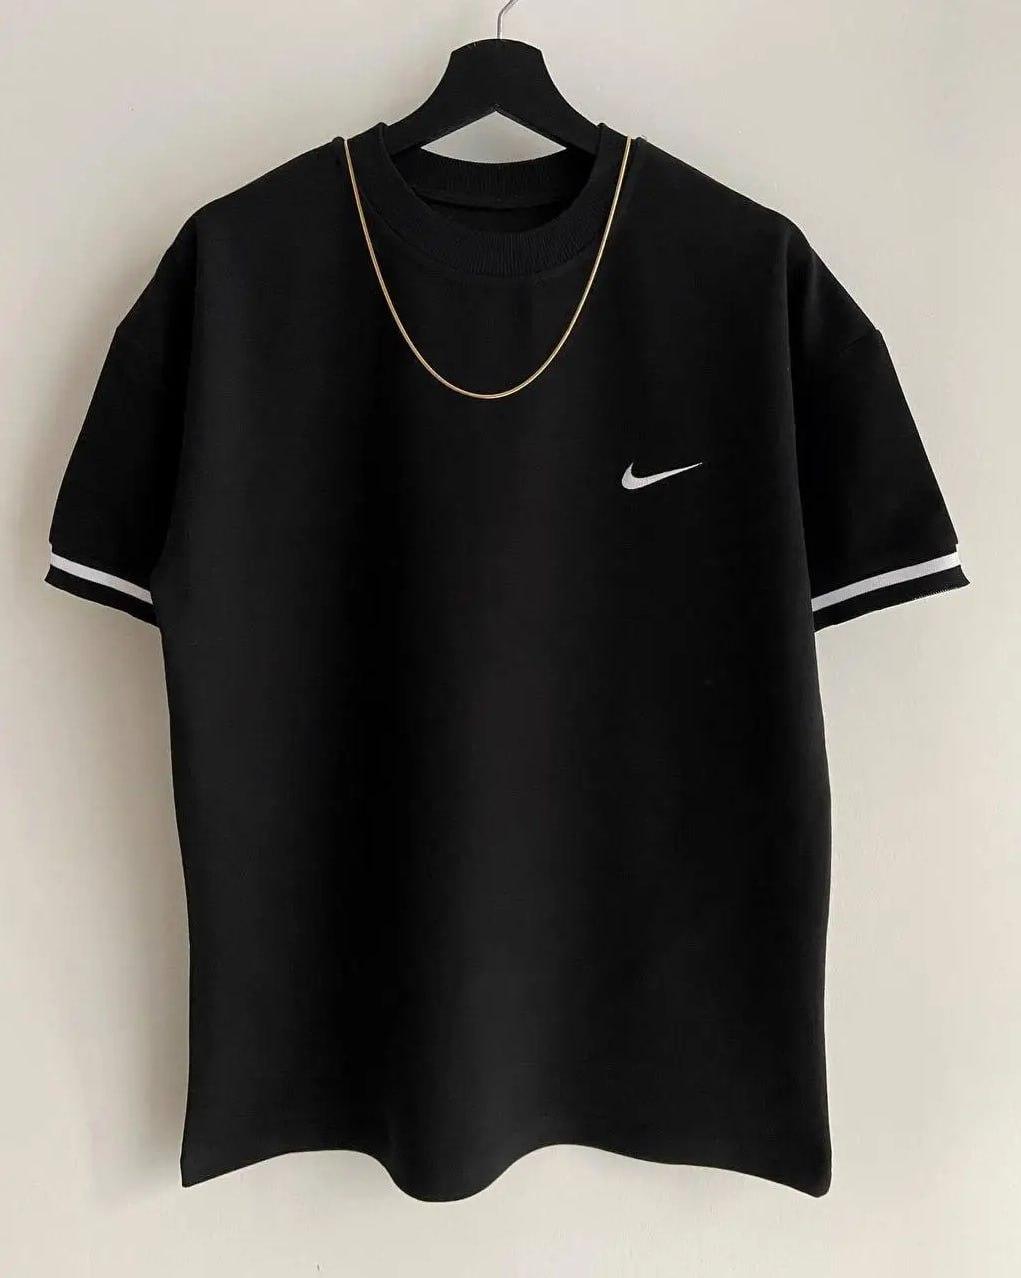 Мужская футболка Nike черная с вышитым лого